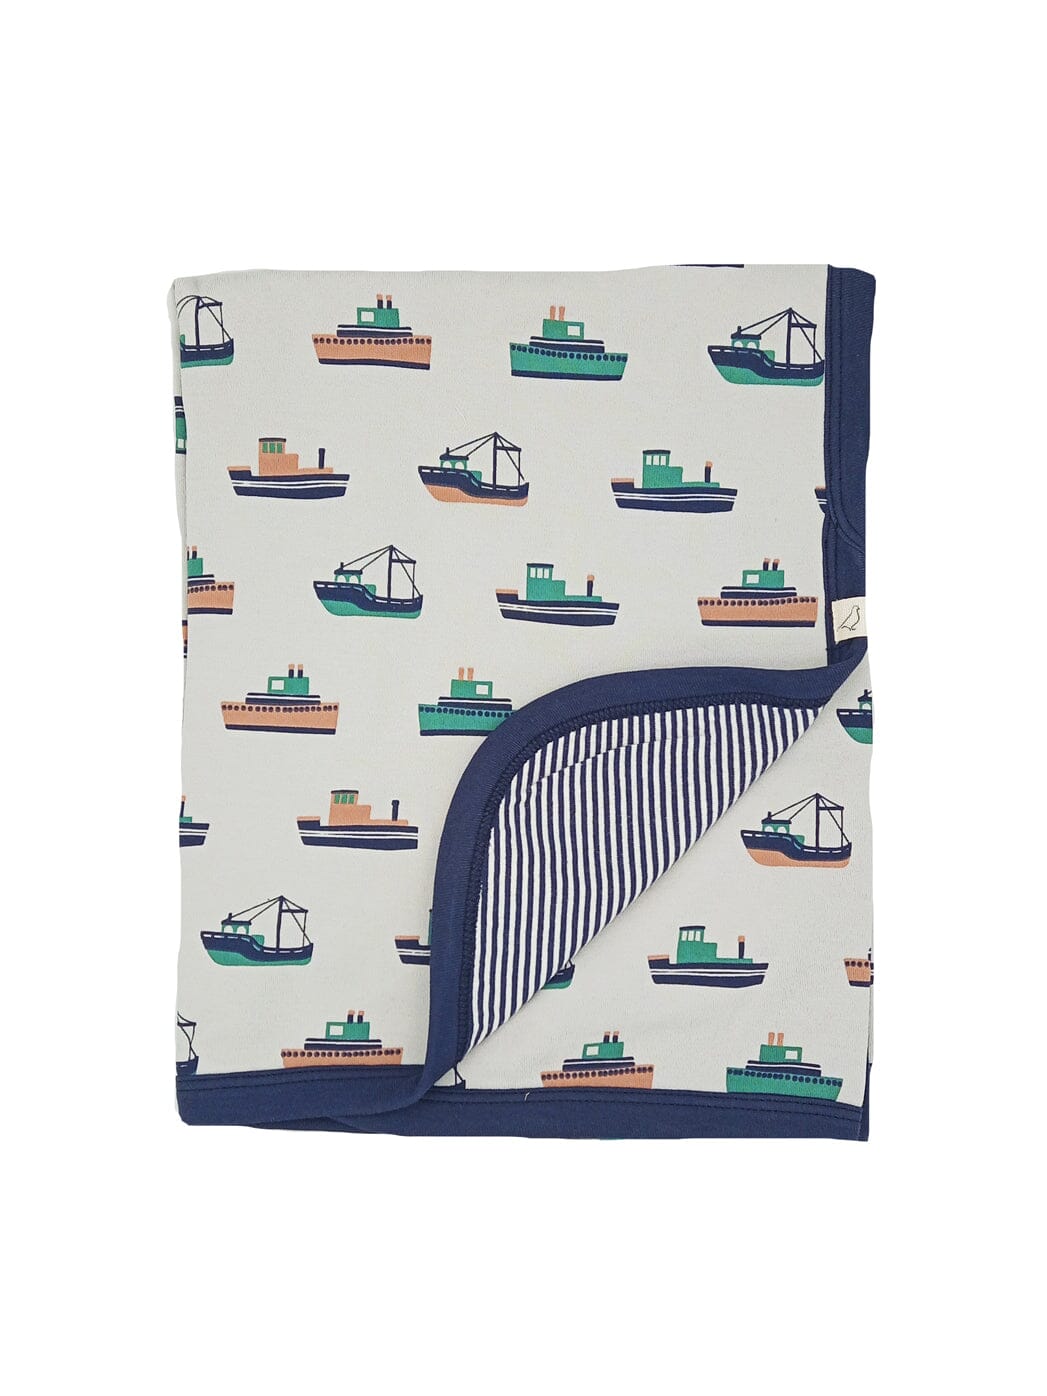 Grey Boat Print Blanket by Pigeon Organics - Blanket - Pigeon Organics